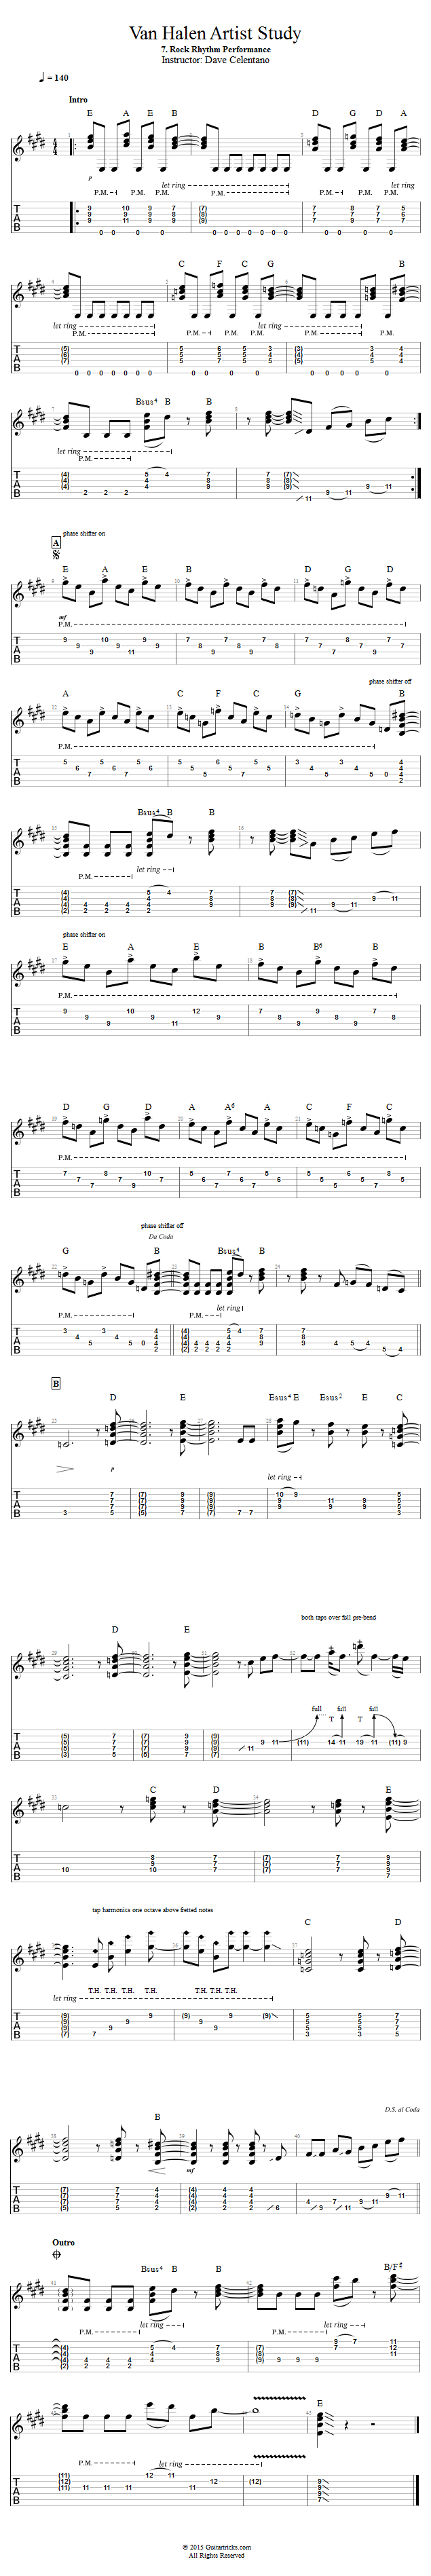 Rock Rhythm Performance song notation